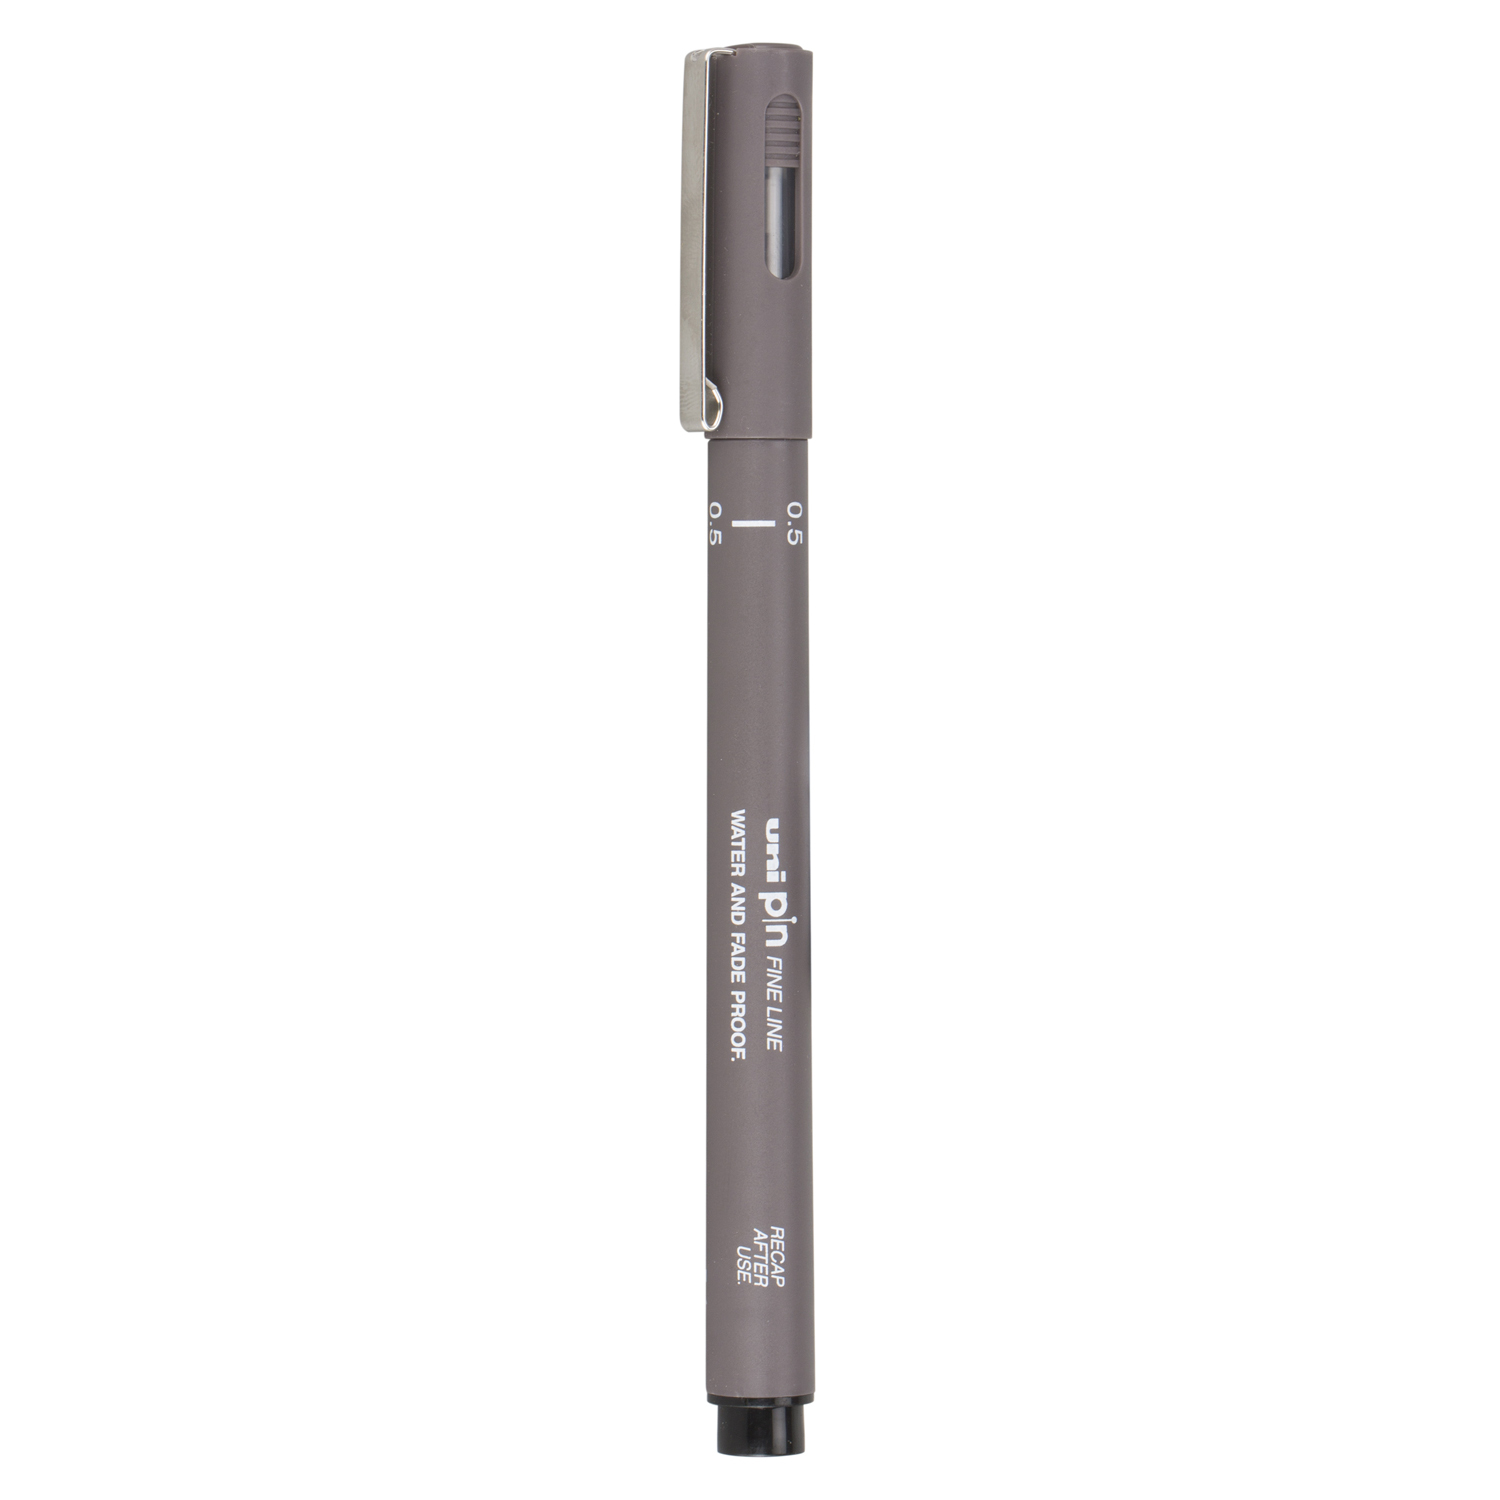 Uni-ball 0.5mm Dark Grey Pin Fine Liner Drawing Pen Image 1